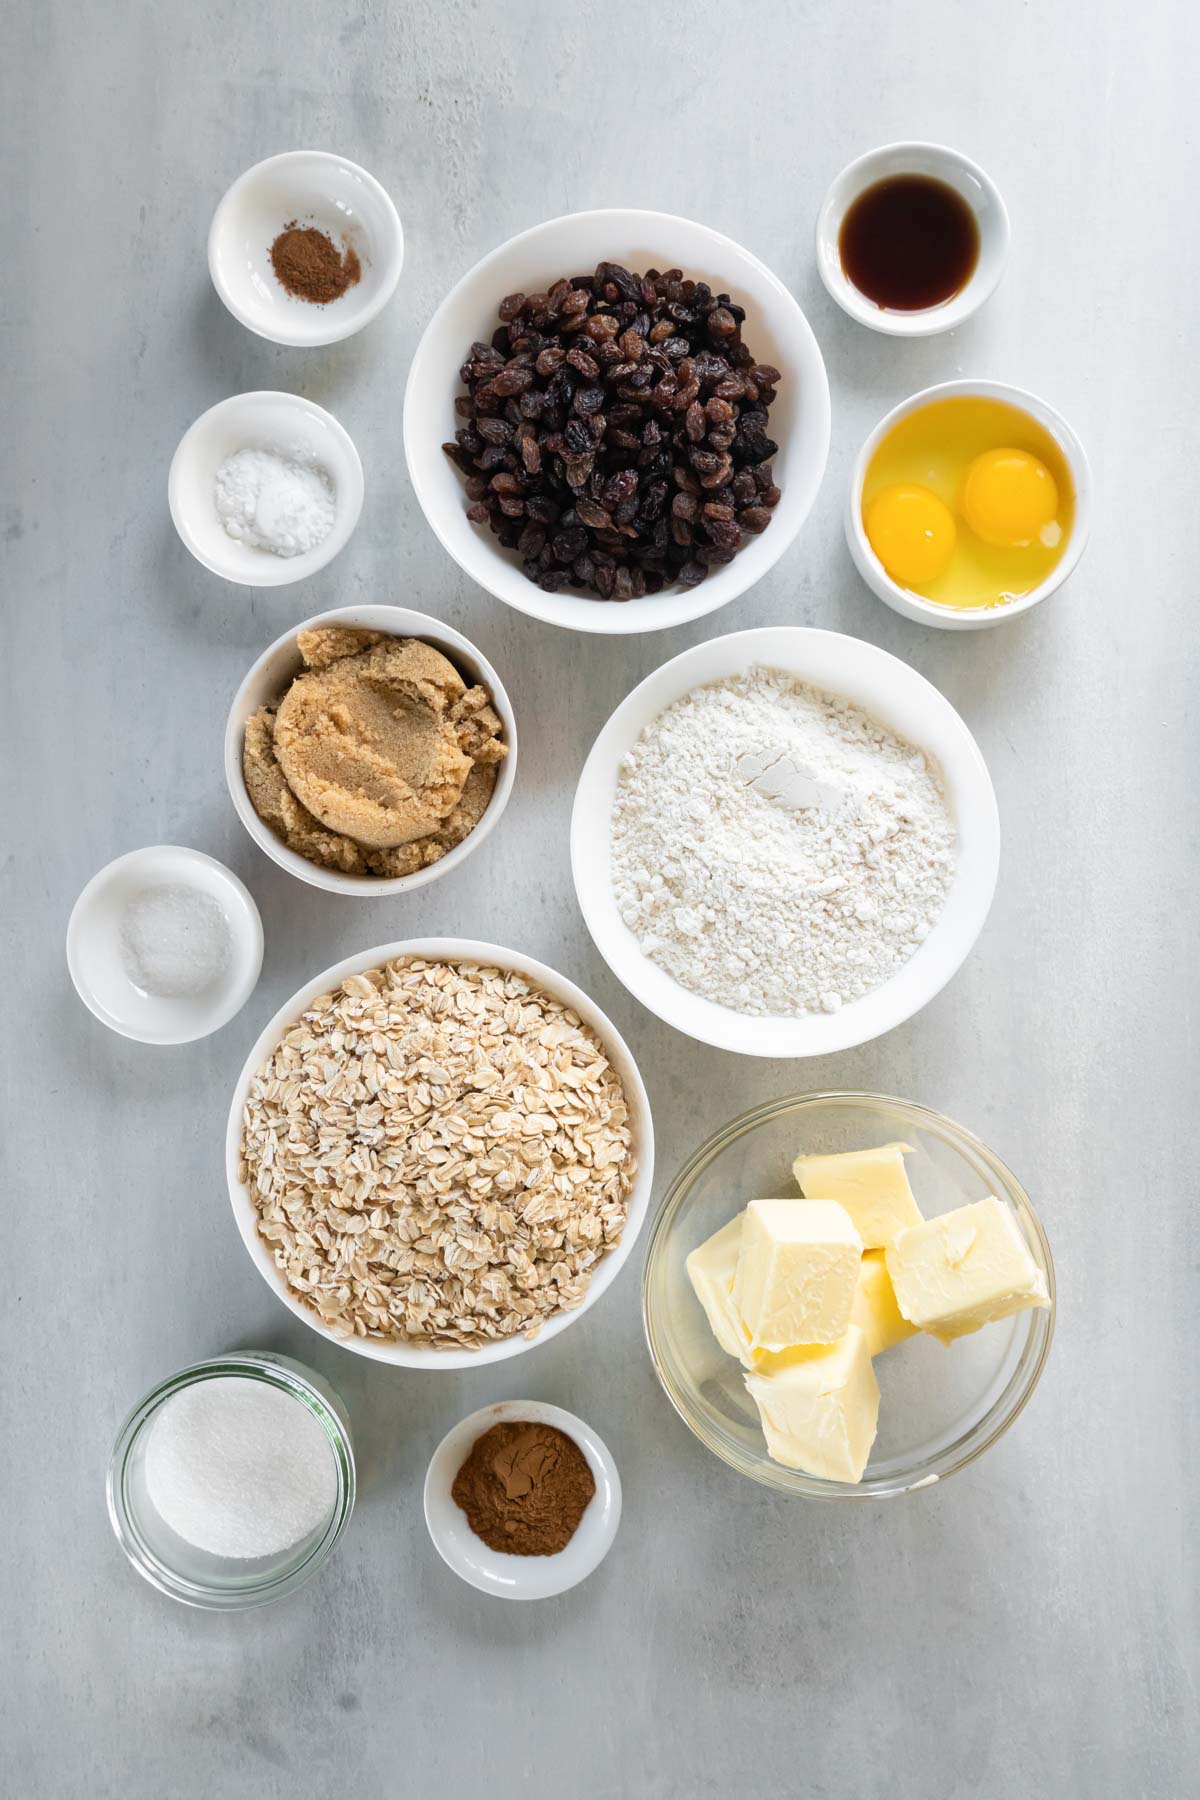 Ingredients for oatmeal raisin cookies recipe.